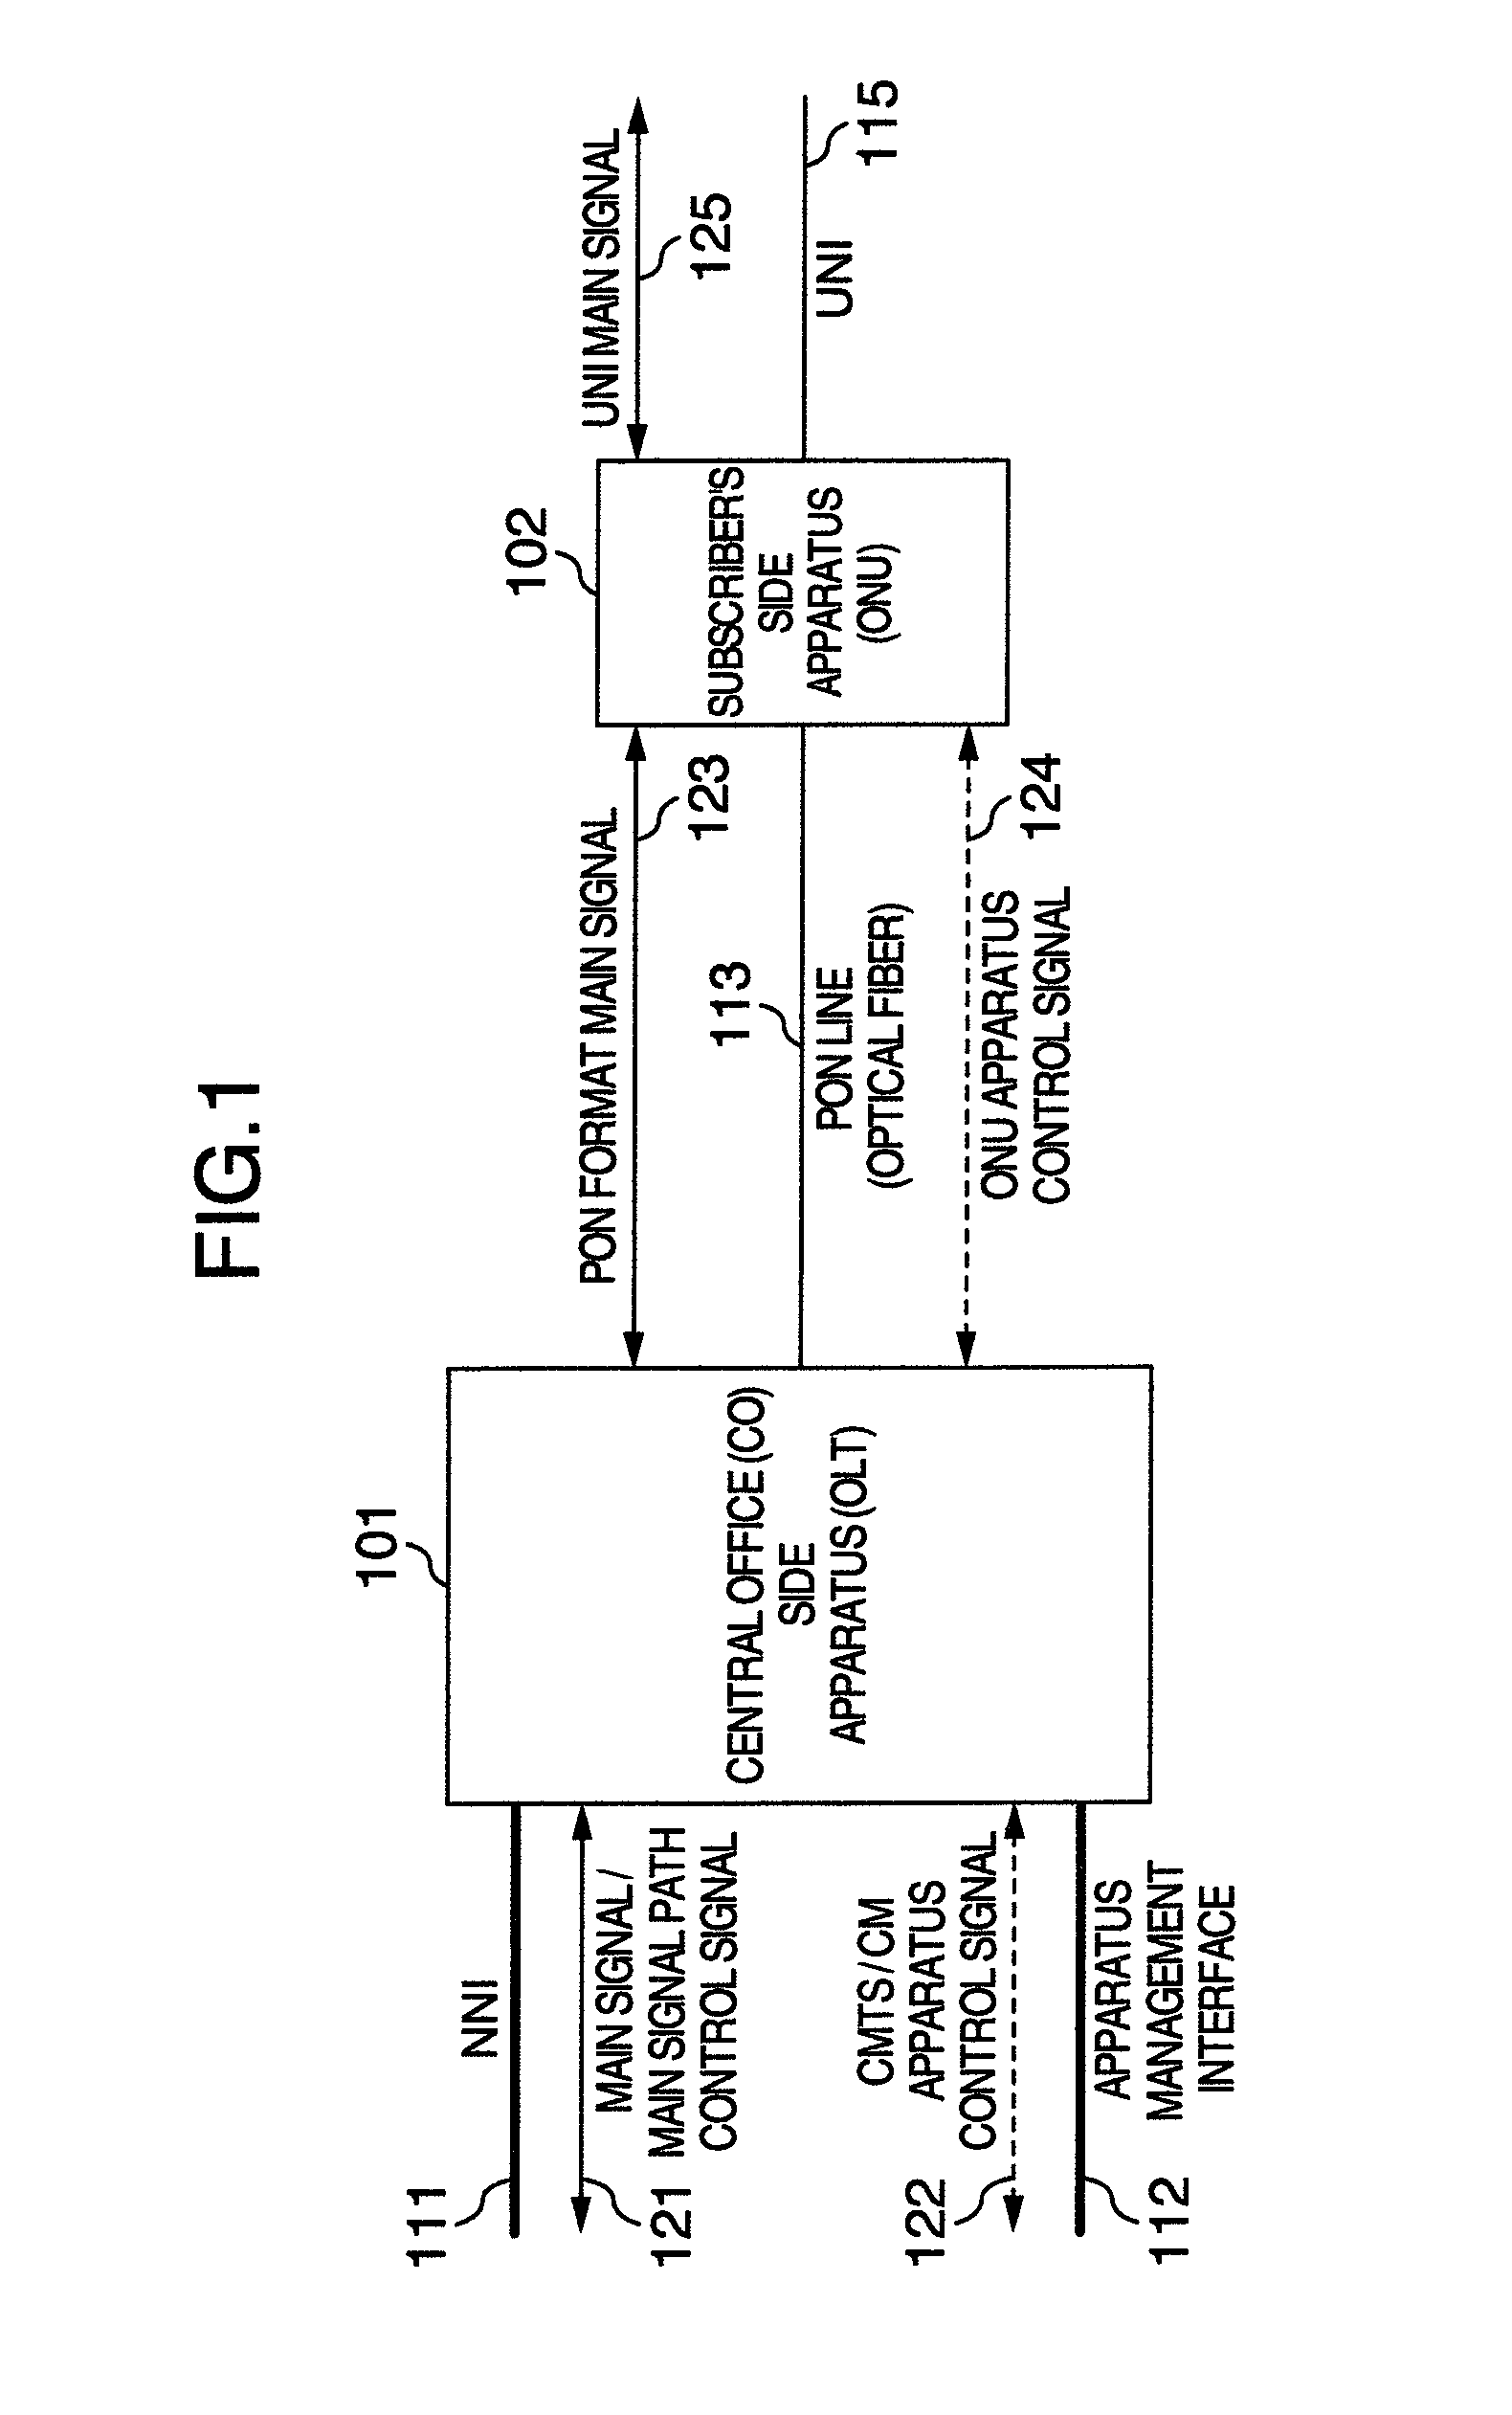 Communication system using passive optical network and passive optical network